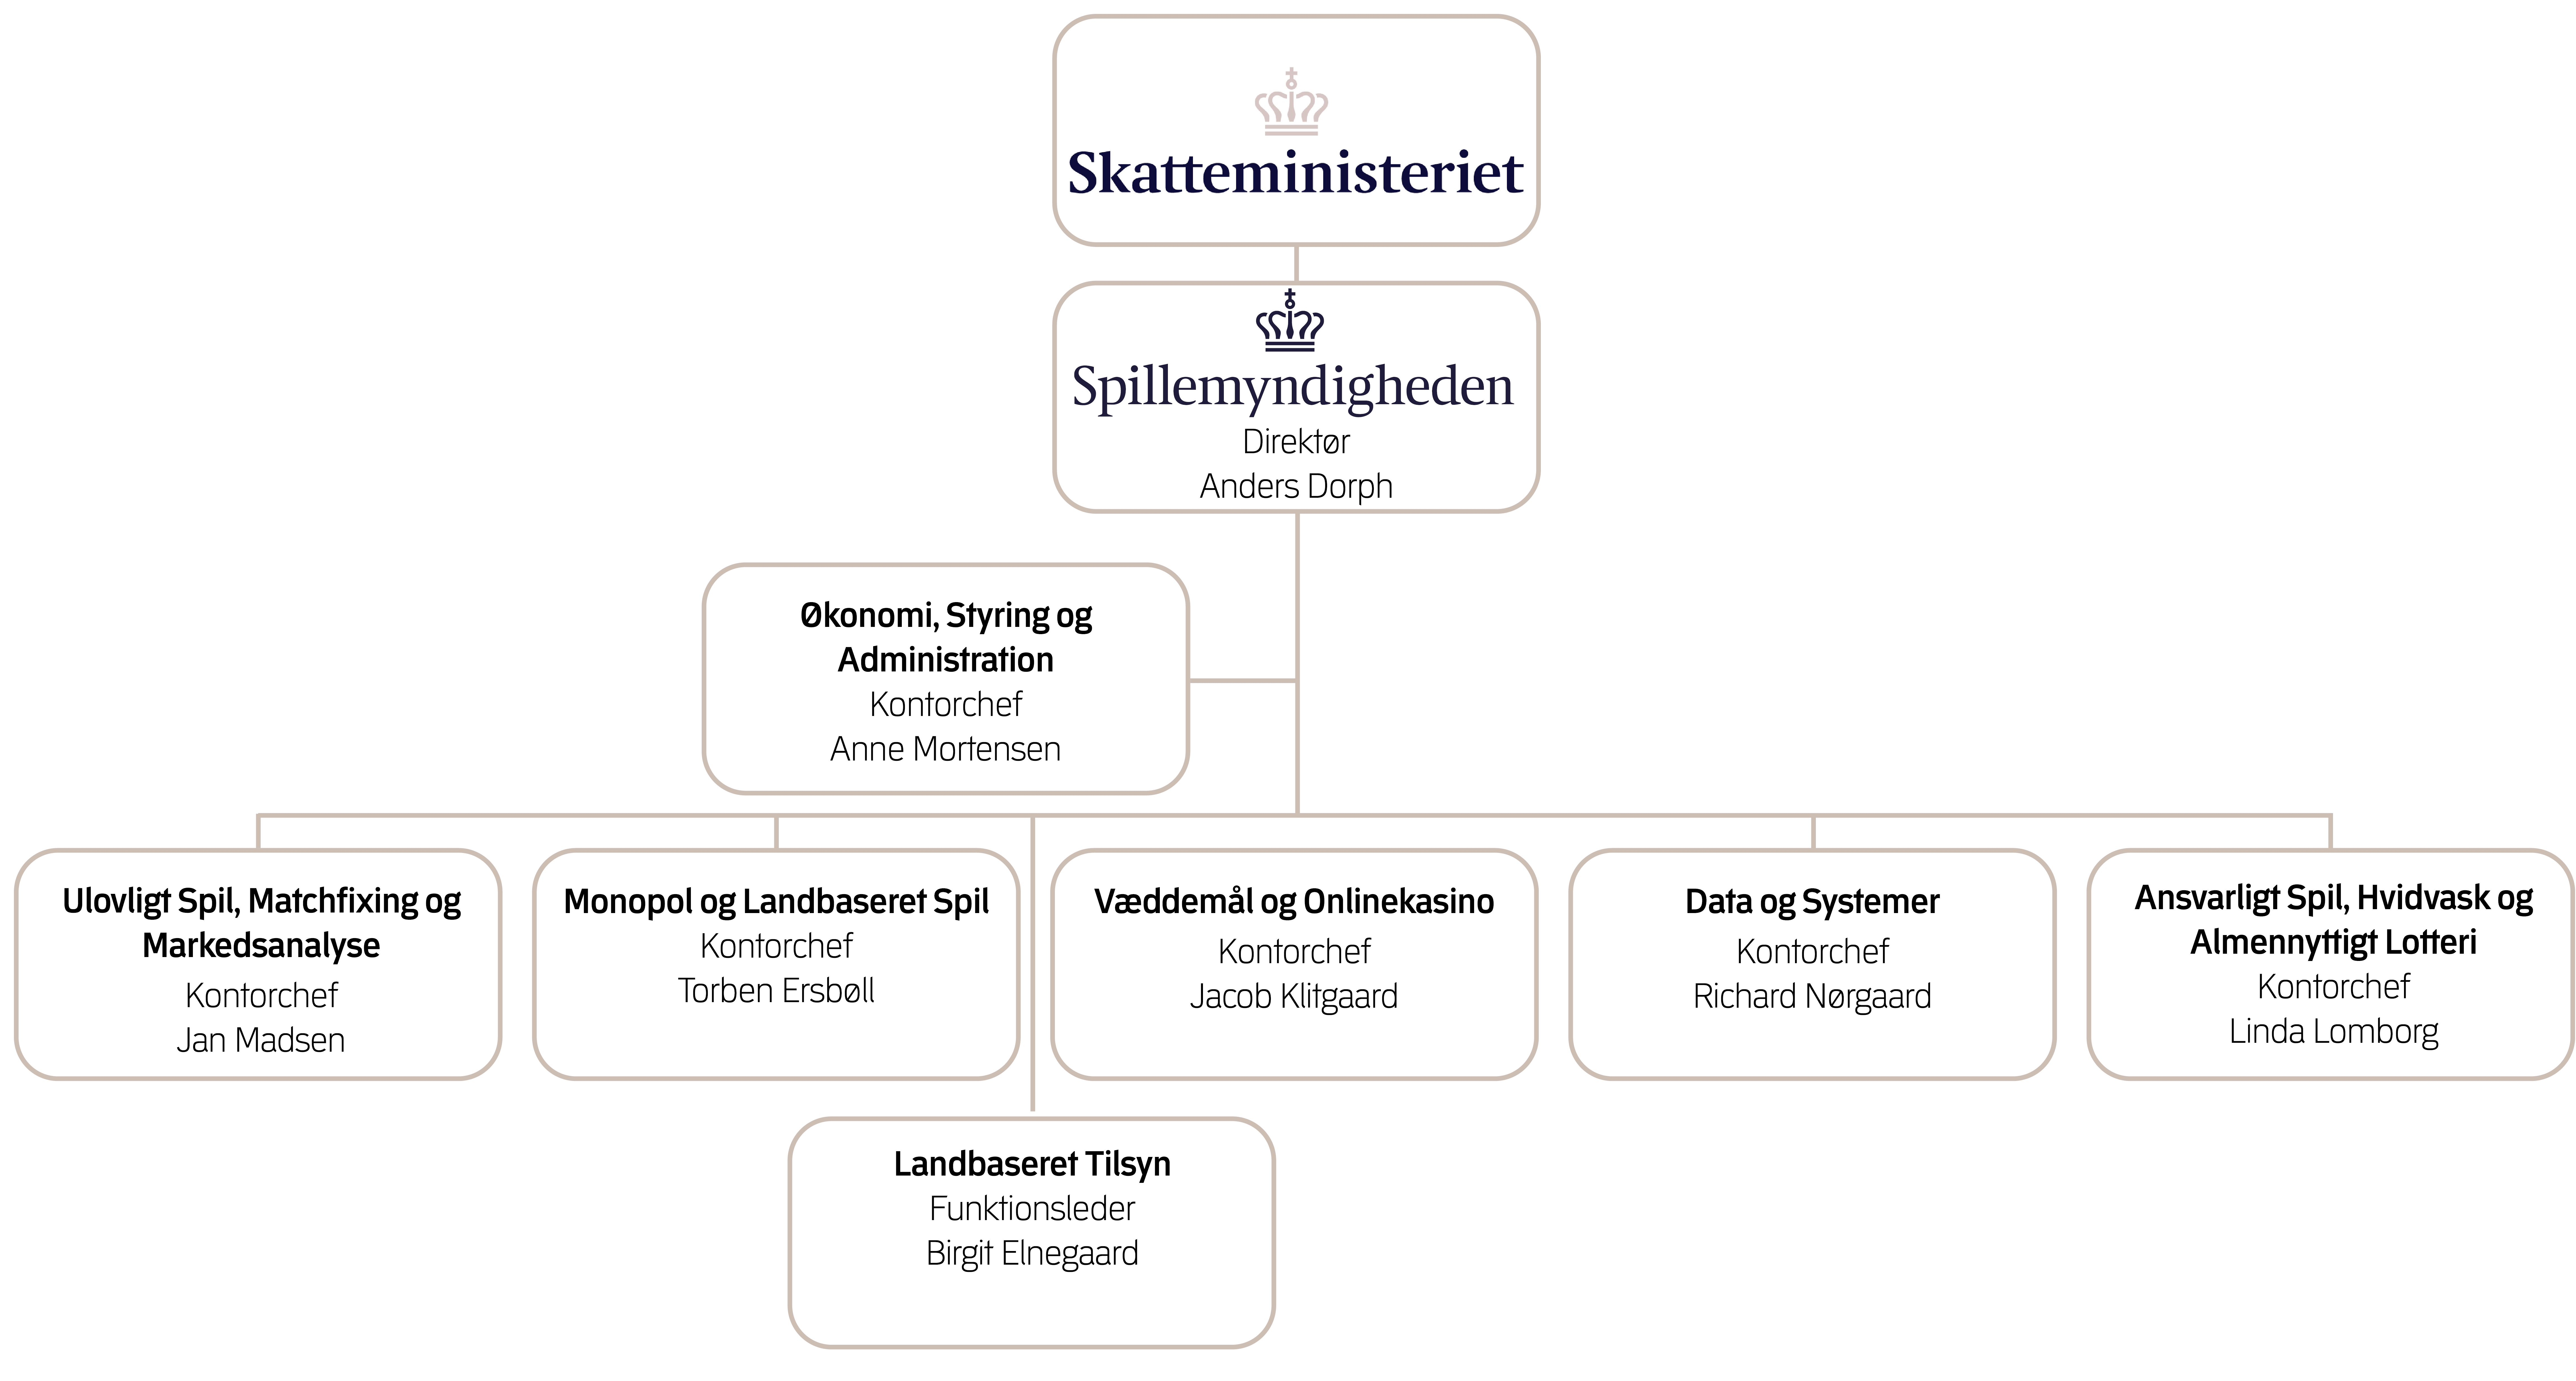 Organisationsdiagram over Spillemyndigheden